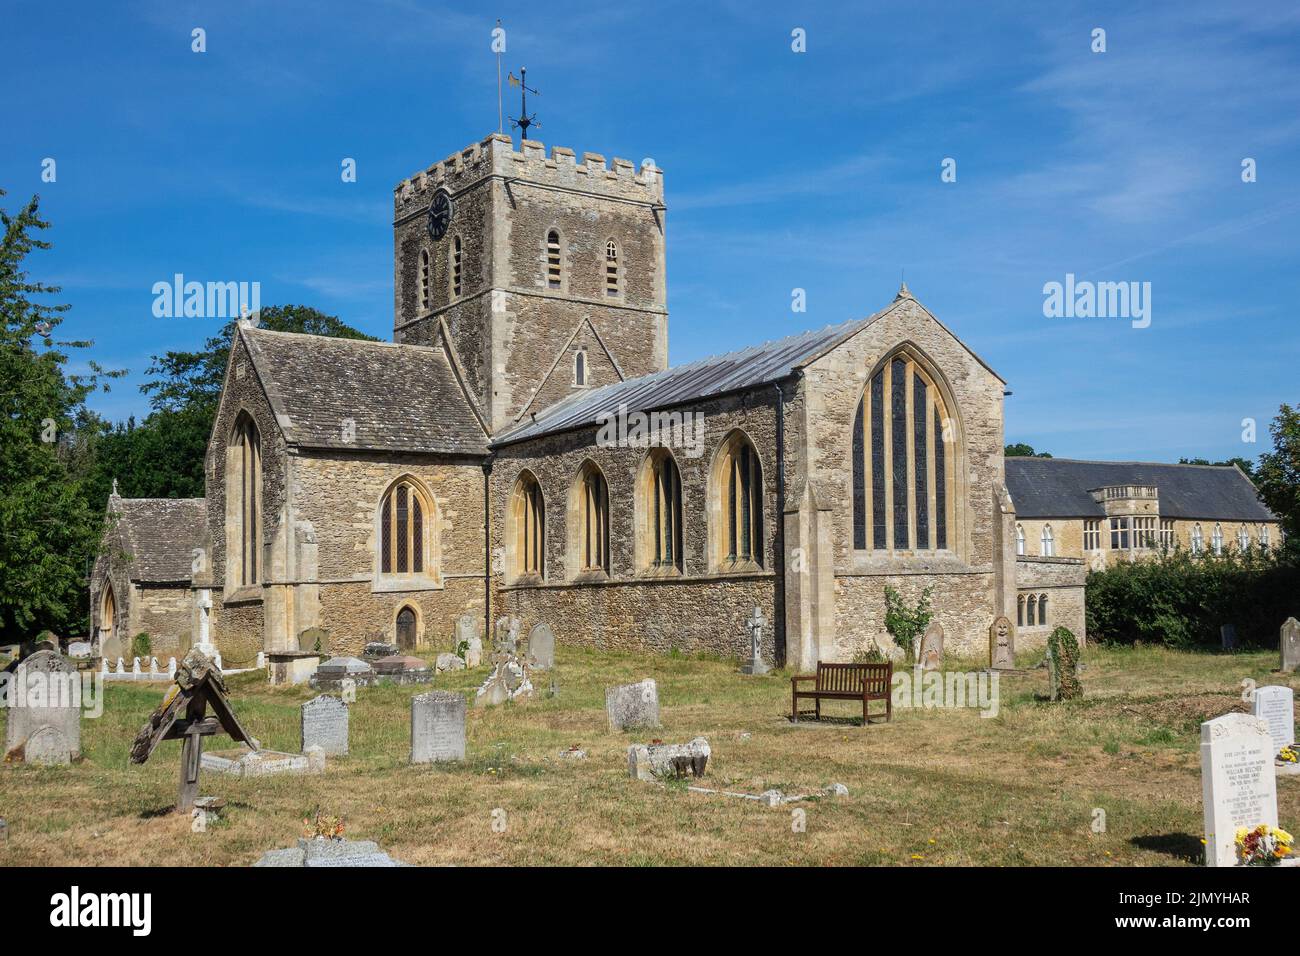 Inglaterra, Oxfordshire, Buckland iglesia Foto de stock